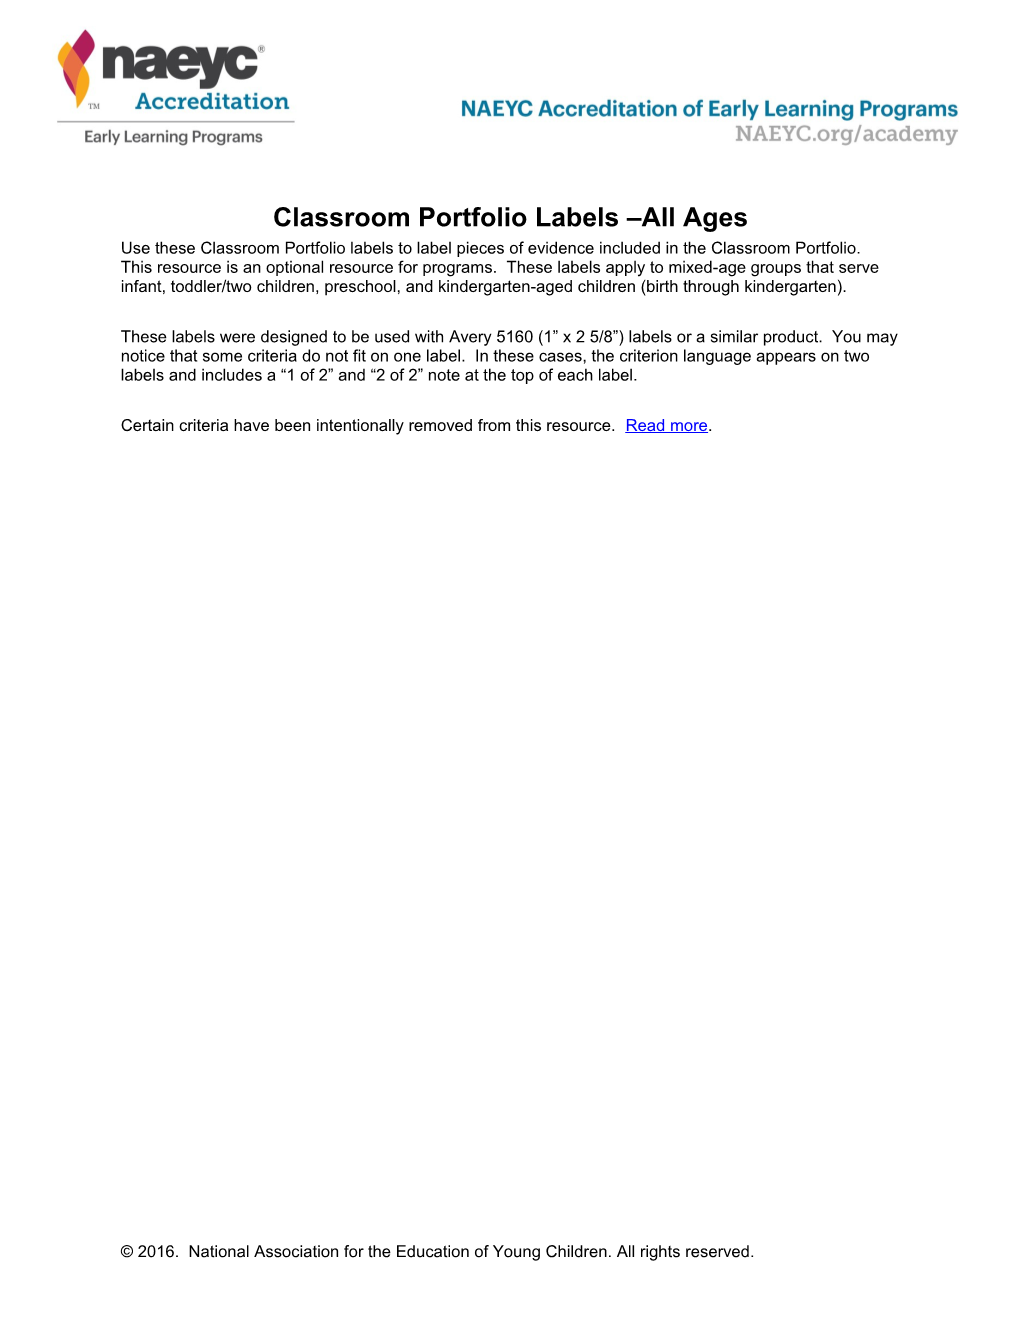 Classroom Portfolio Labels All Ages